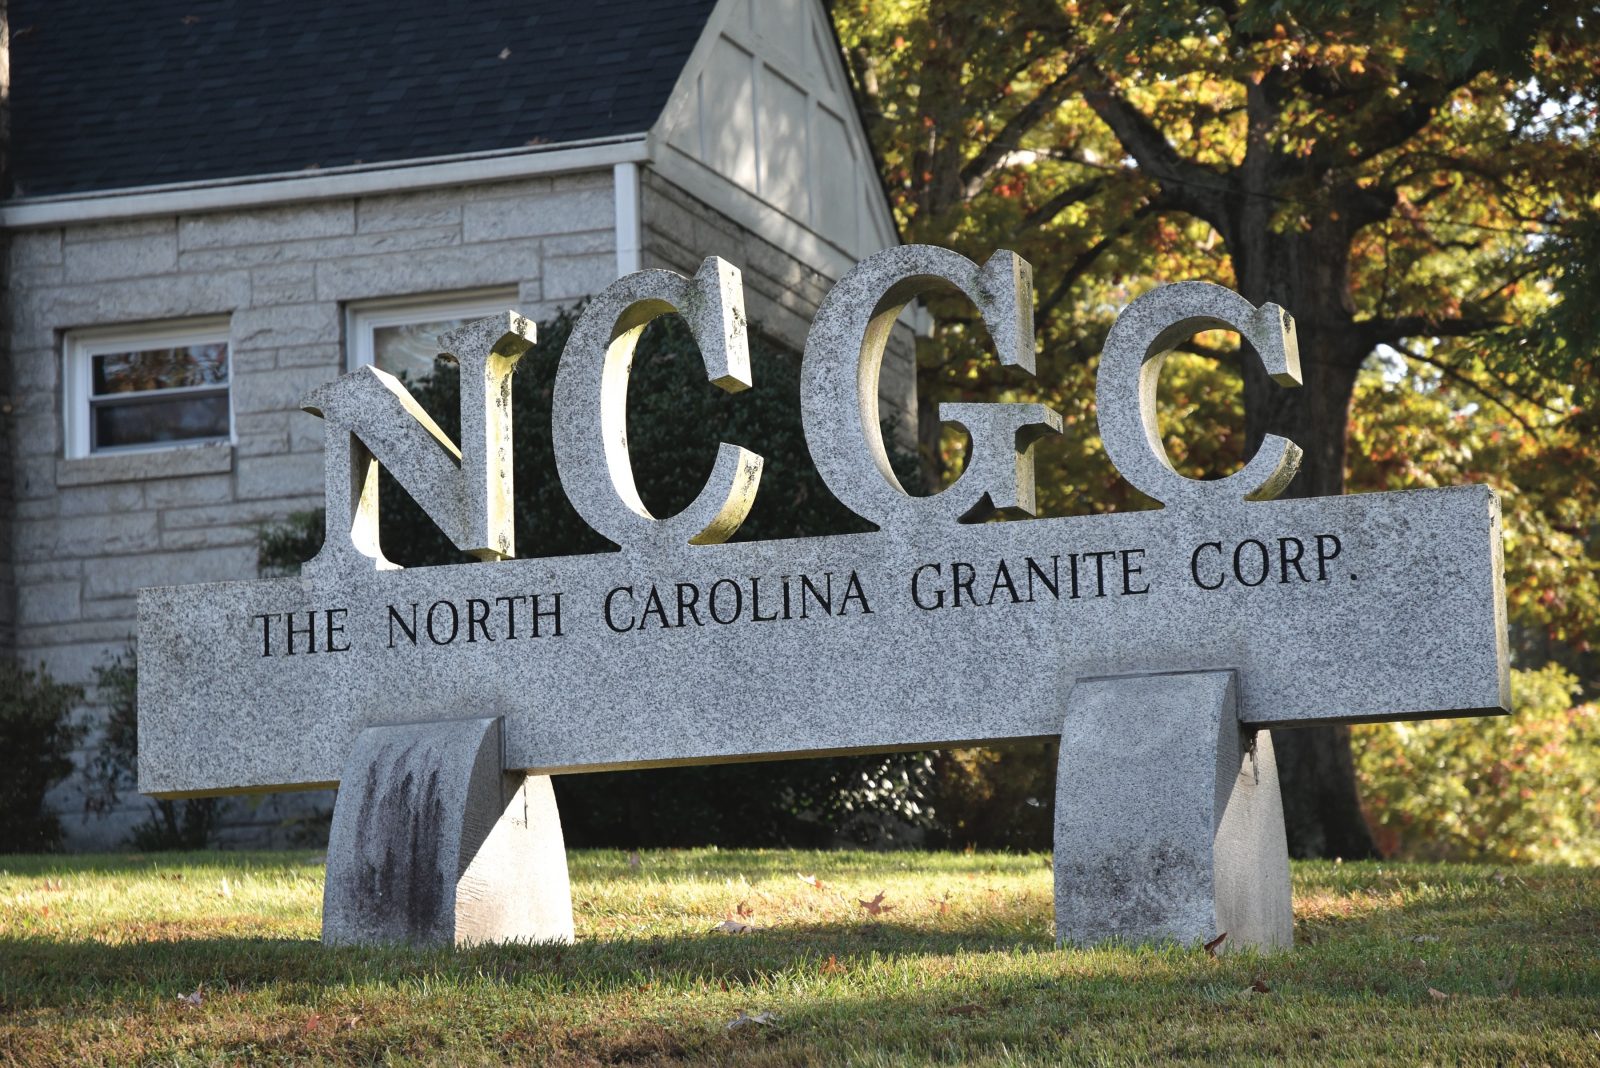 Mount Airy, North Carolina Granite Corporation, Mayberry